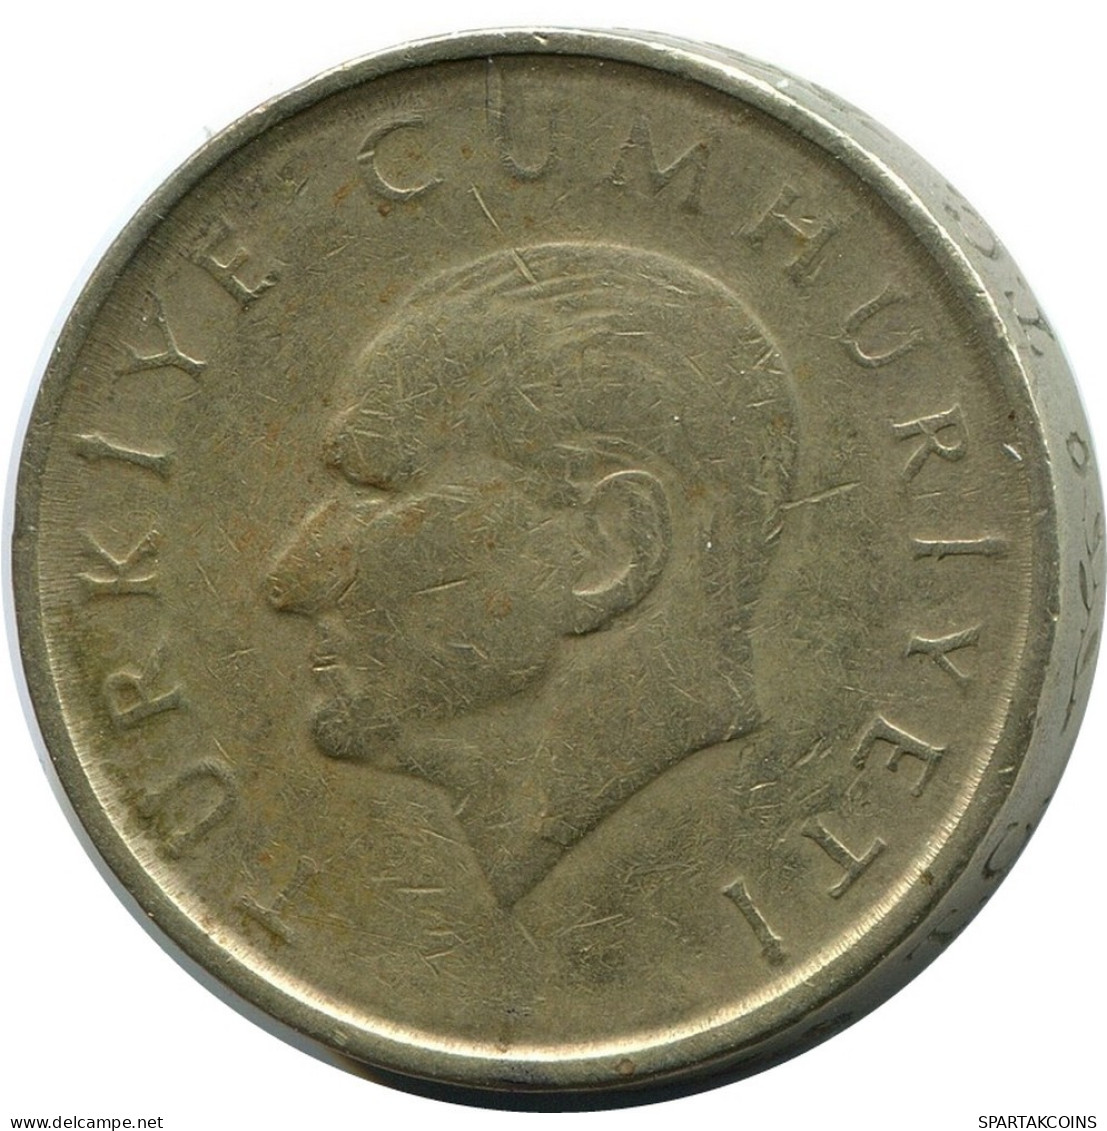 25 LIRA 1998 TURKEY Coin #AR251.U.A - Turkey